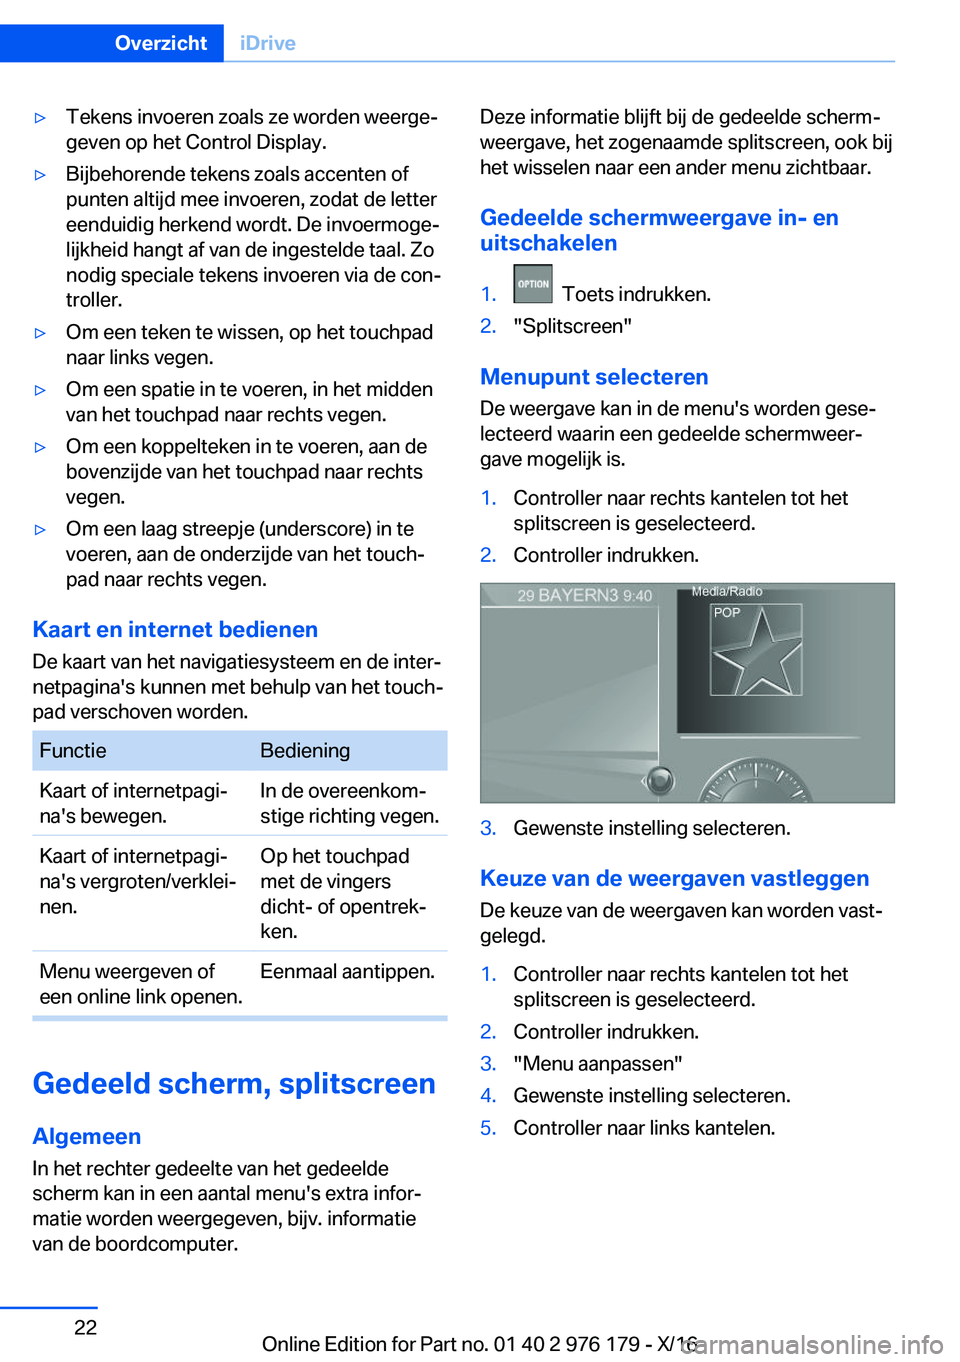 BMW X5 M 2017  Instructieboekjes (in Dutch) 'y�T�e�k�e�n�s� �i�n�v�o�e�r�e�n� �z�o�a�l�s� �z�e� �w�o�r�d�e�n� �w�e�e�r�g�ej
�g�e�v�e�n� �o�p� �h�e�t� �C�o�n�t�r�o�l� �D�i�s�p�l�a�y�.'y�B�i�j�b�e�h�o�r�e�n�d�e� �t�e�k�e�n�s� �z�o�a�l�s�